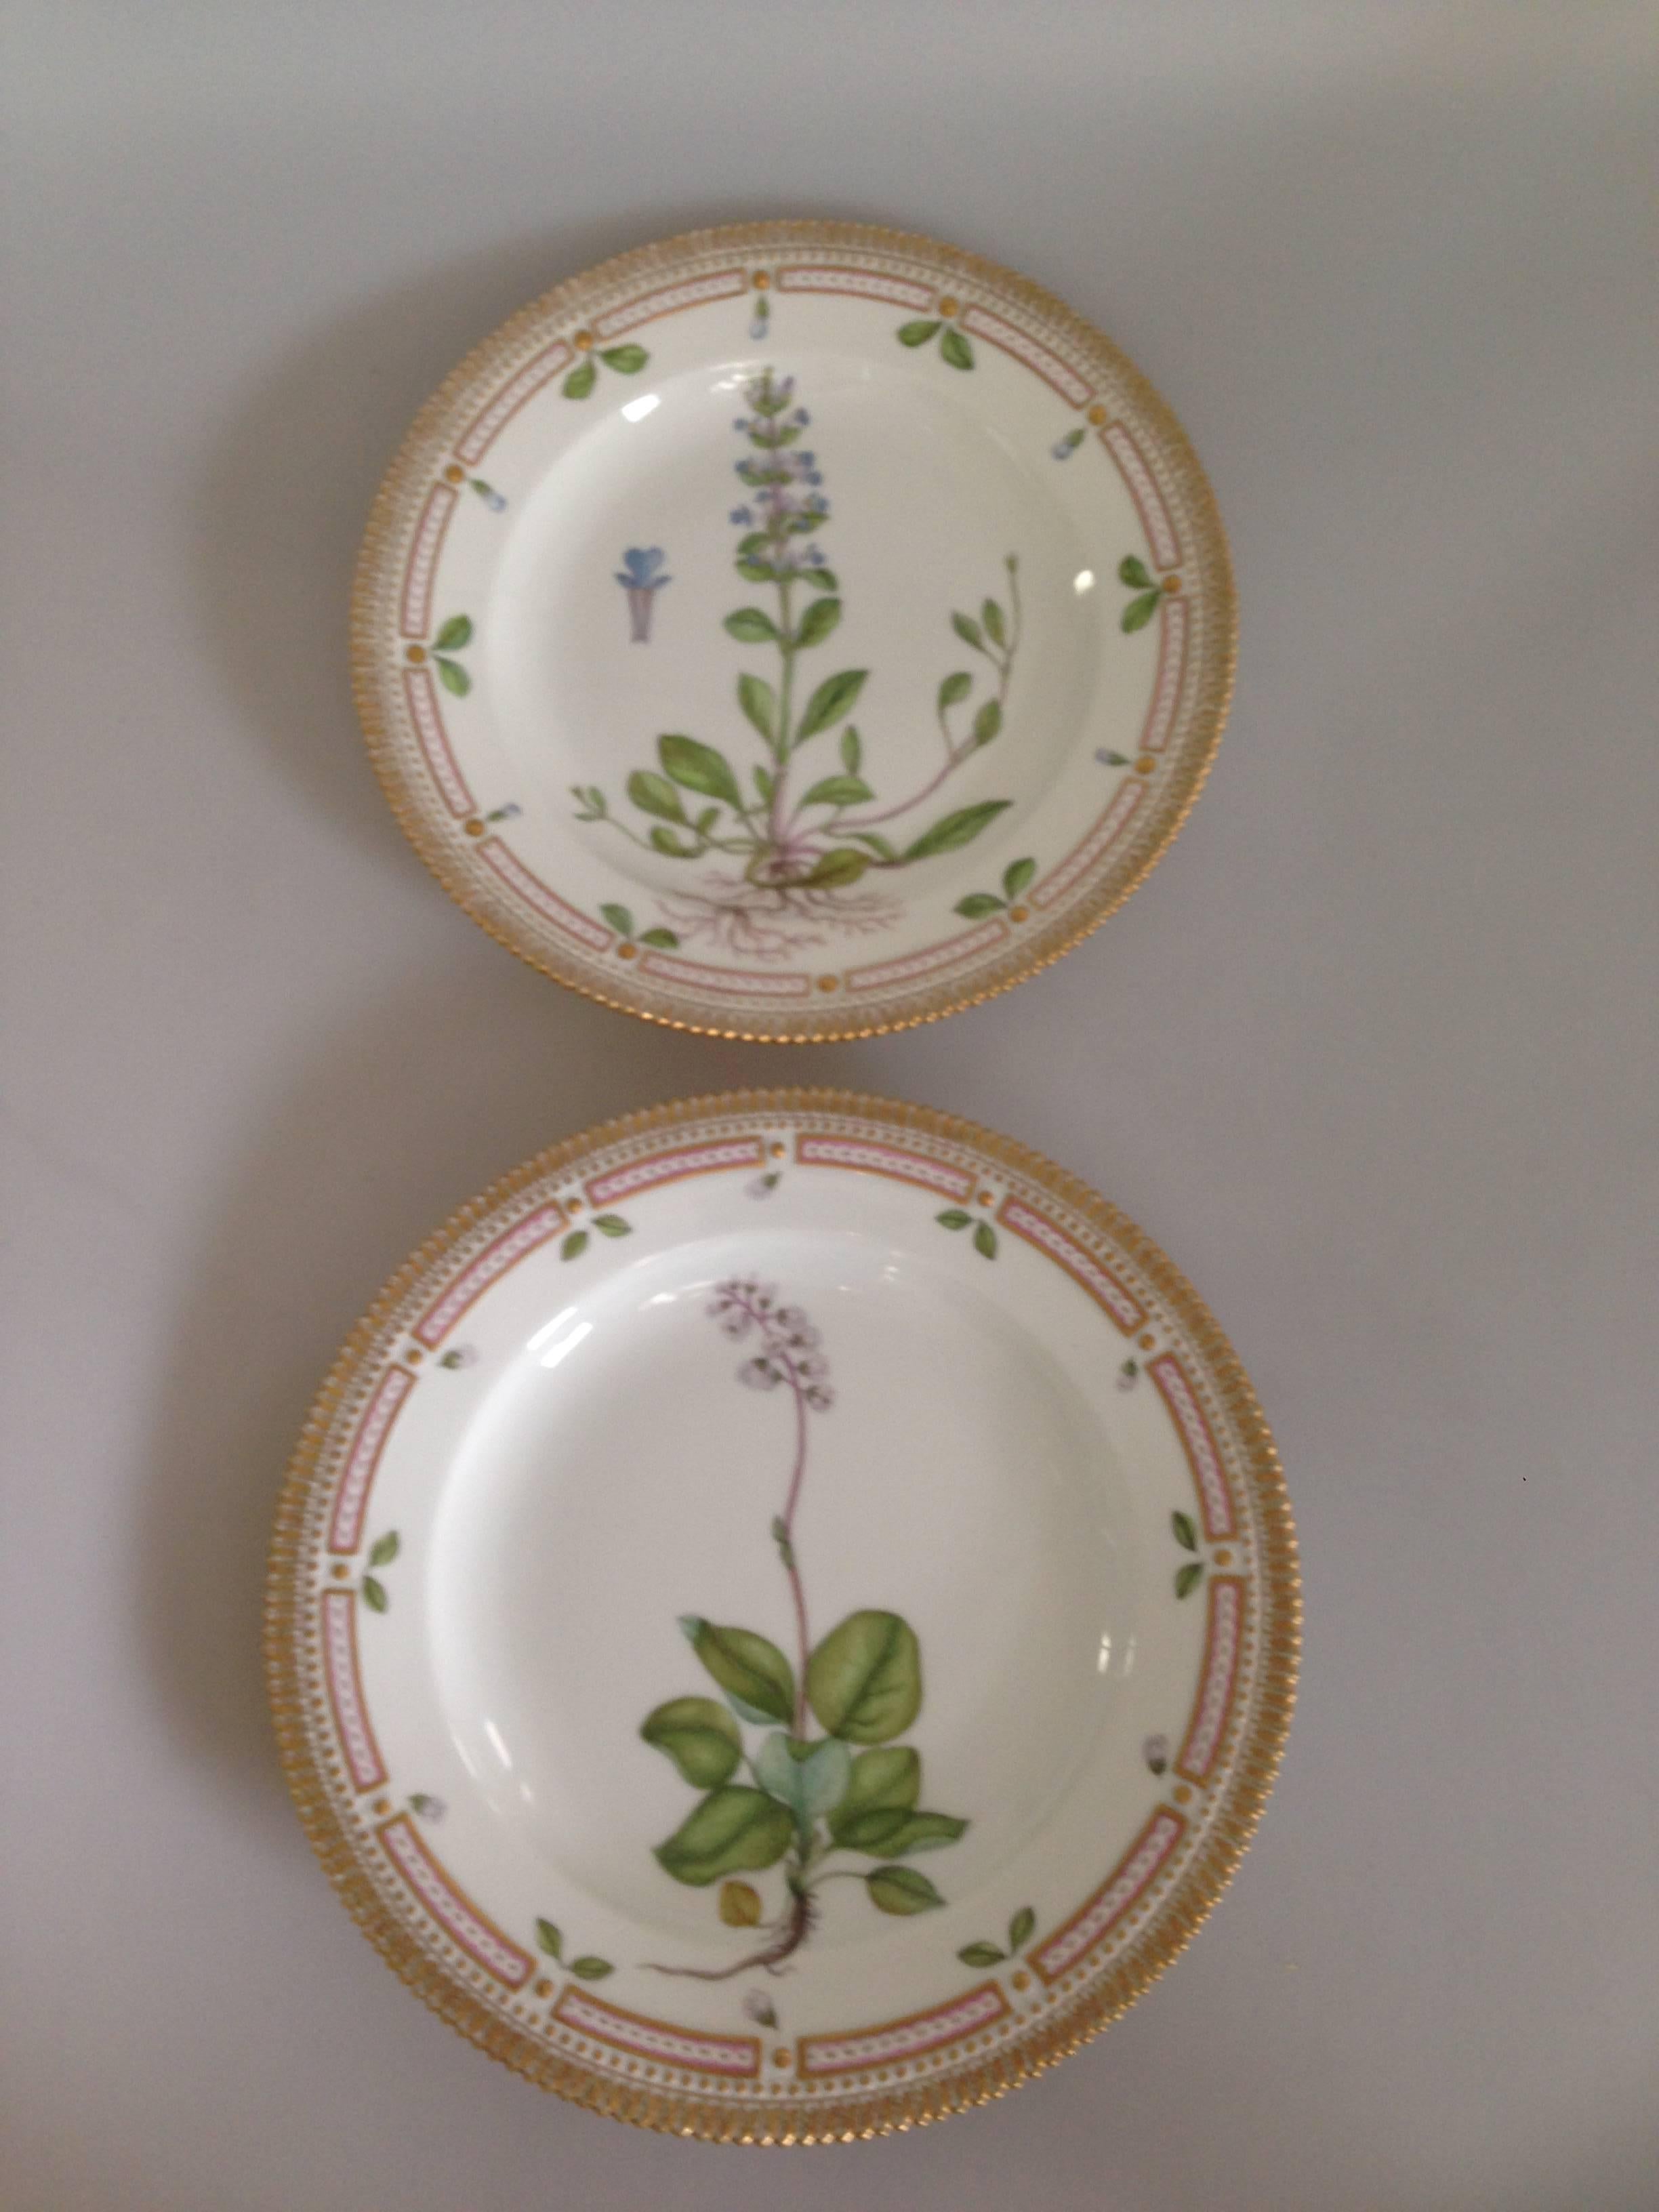 flora danica plates